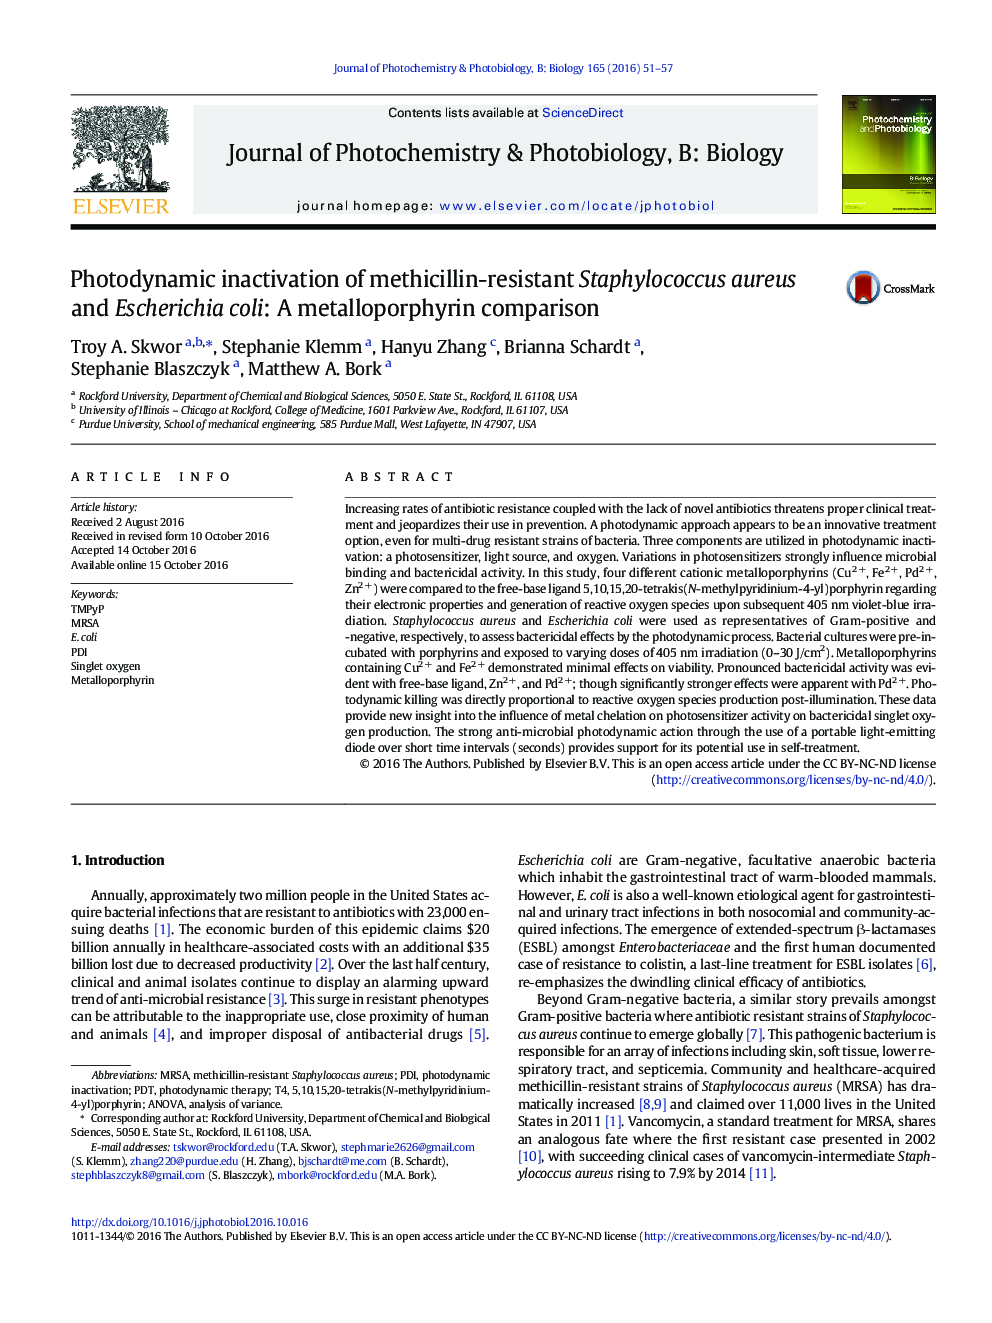 Photodynamic inactivation of methicillin-resistant Staphylococcus aureus and Escherichia coli: A metalloporphyrin comparison